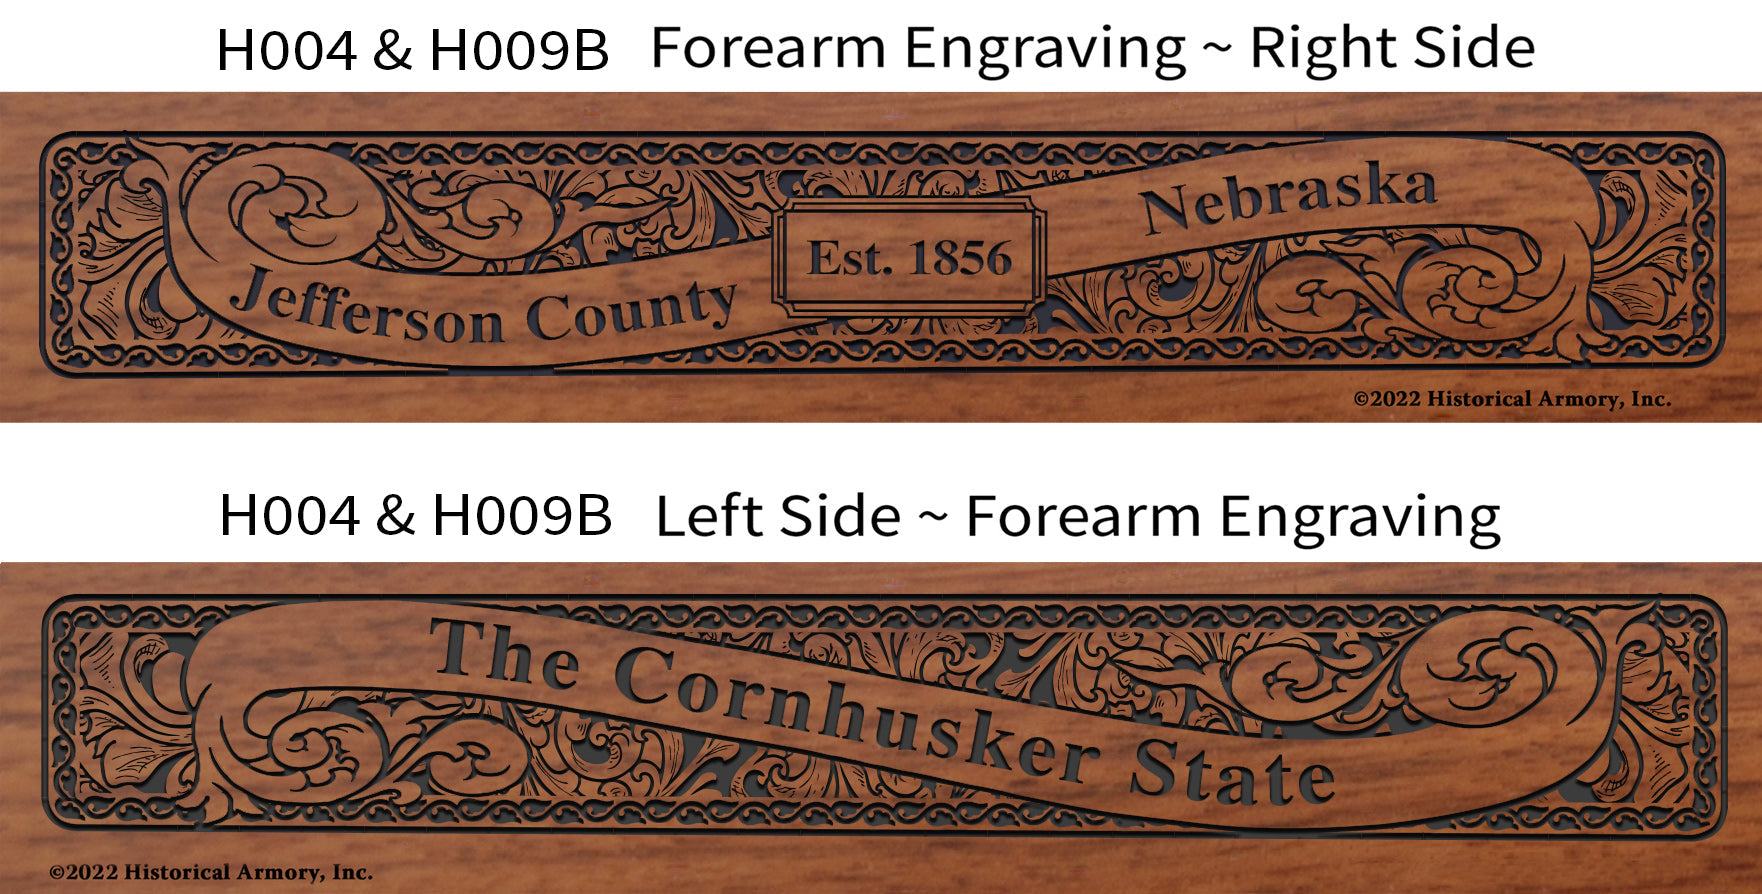 Jefferson County Nebraska Engraved Forearm